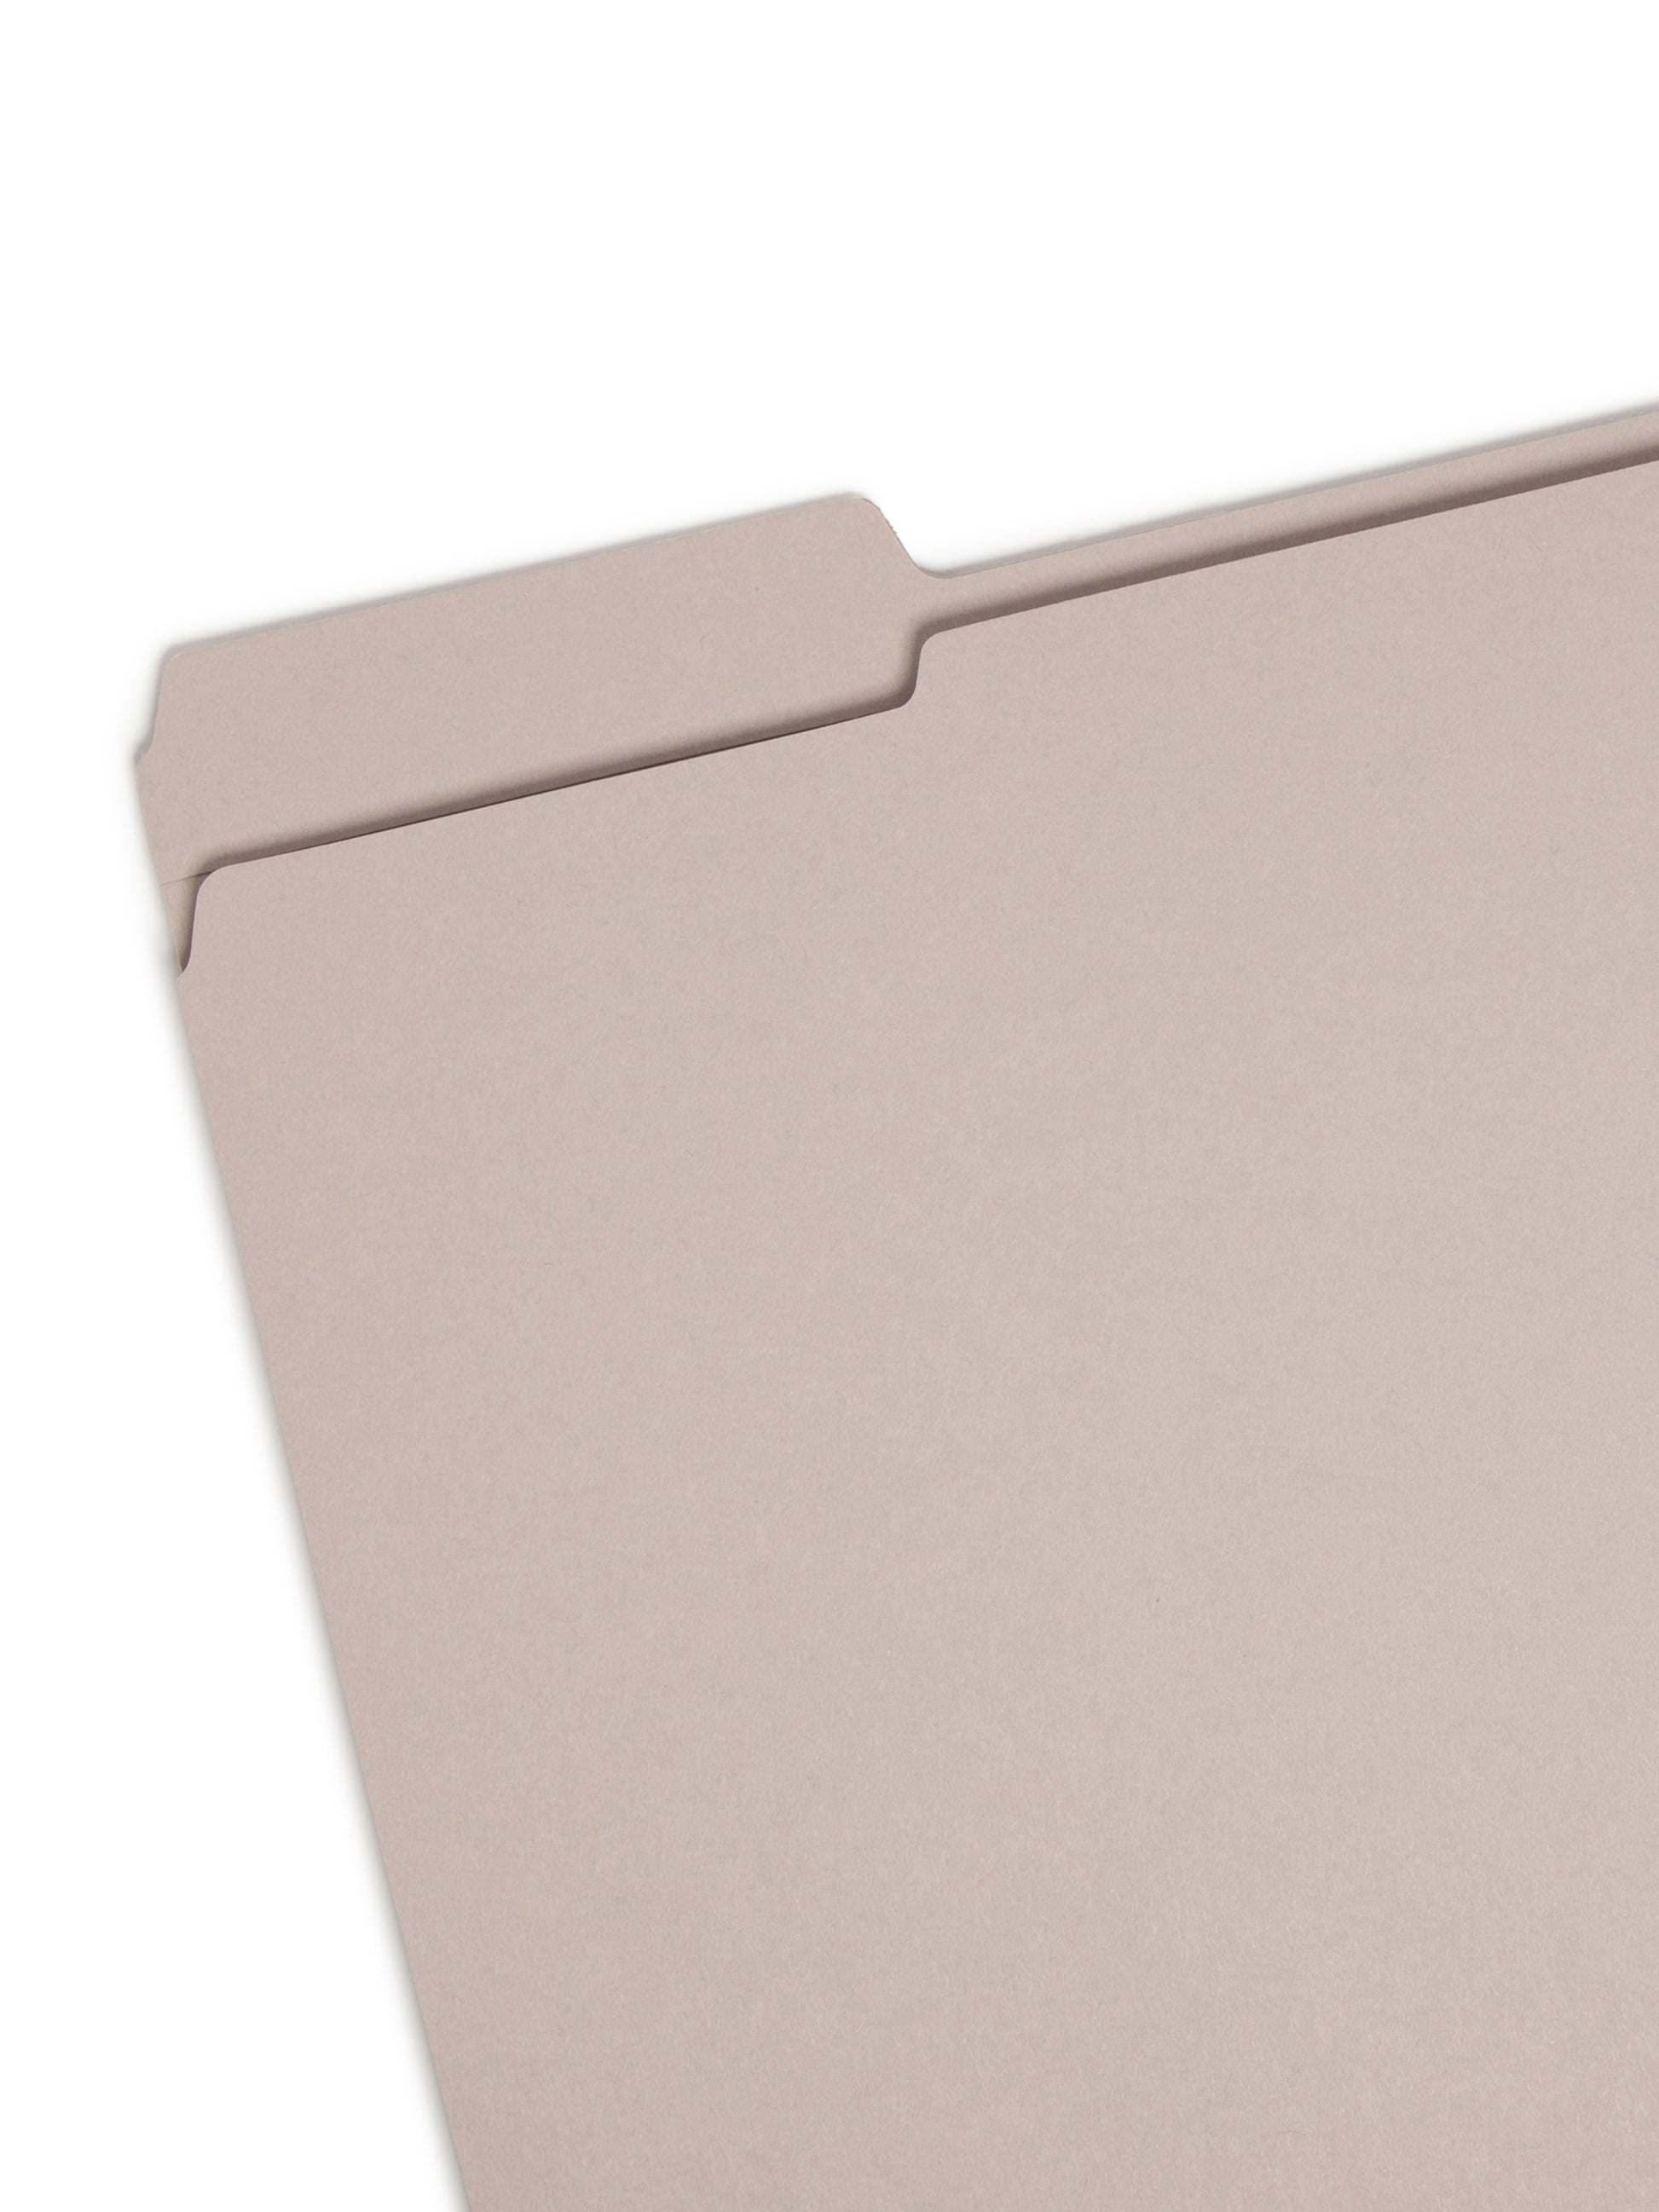 Reinforced Tab File Folders, 1/3-Cut Tab, Gray Color, Letter Size, Set of 100, 086486123341